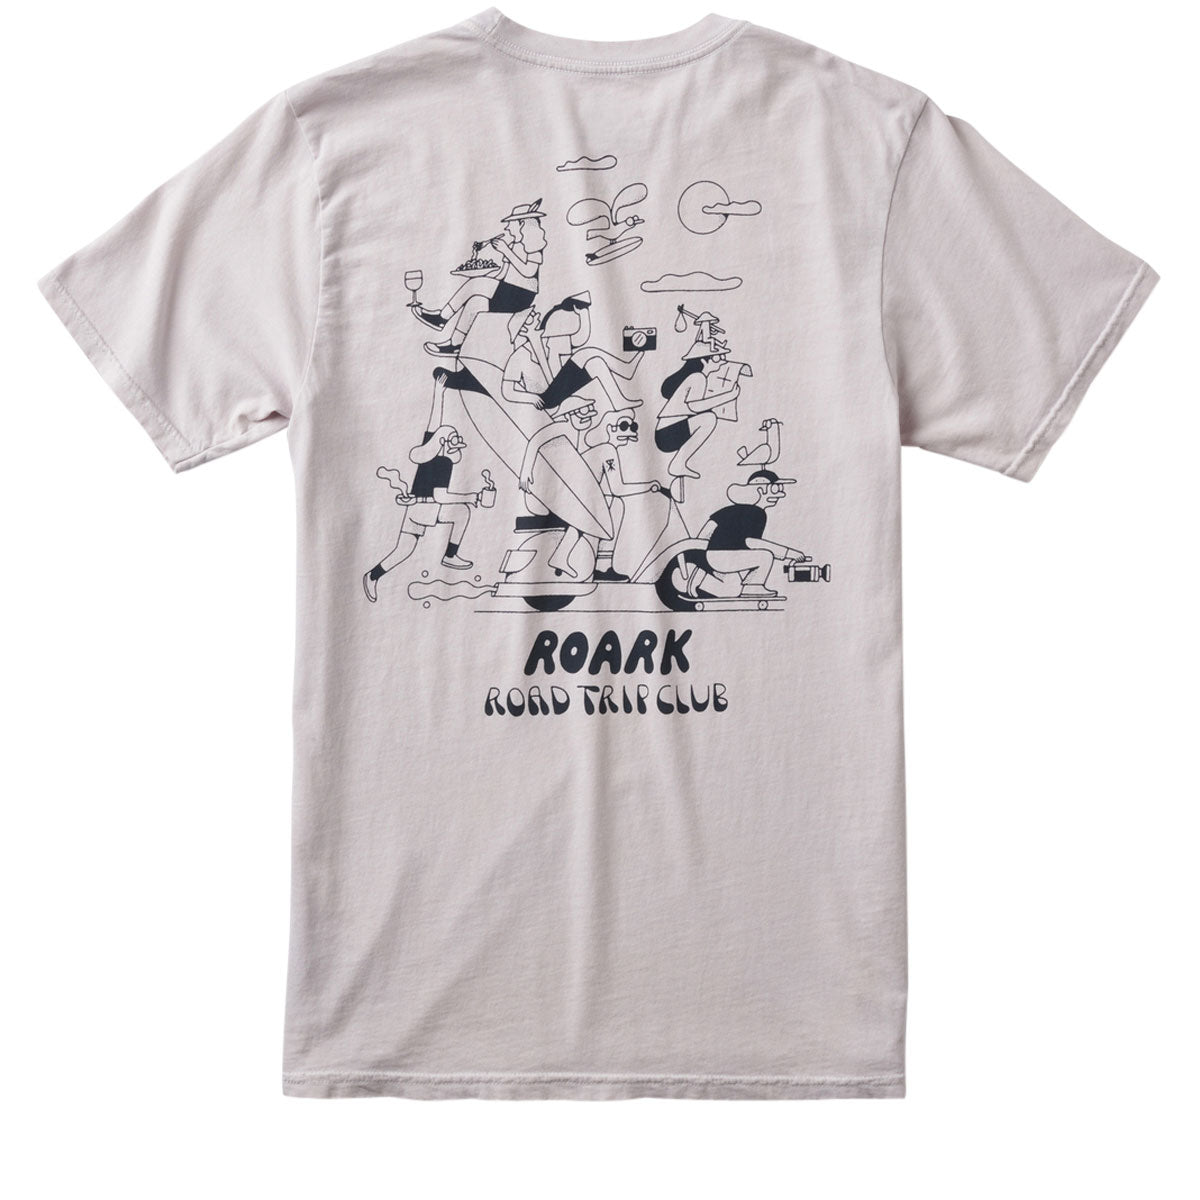 Roark Roadtrip Club T-Shirt - Dusty Lilac image 1